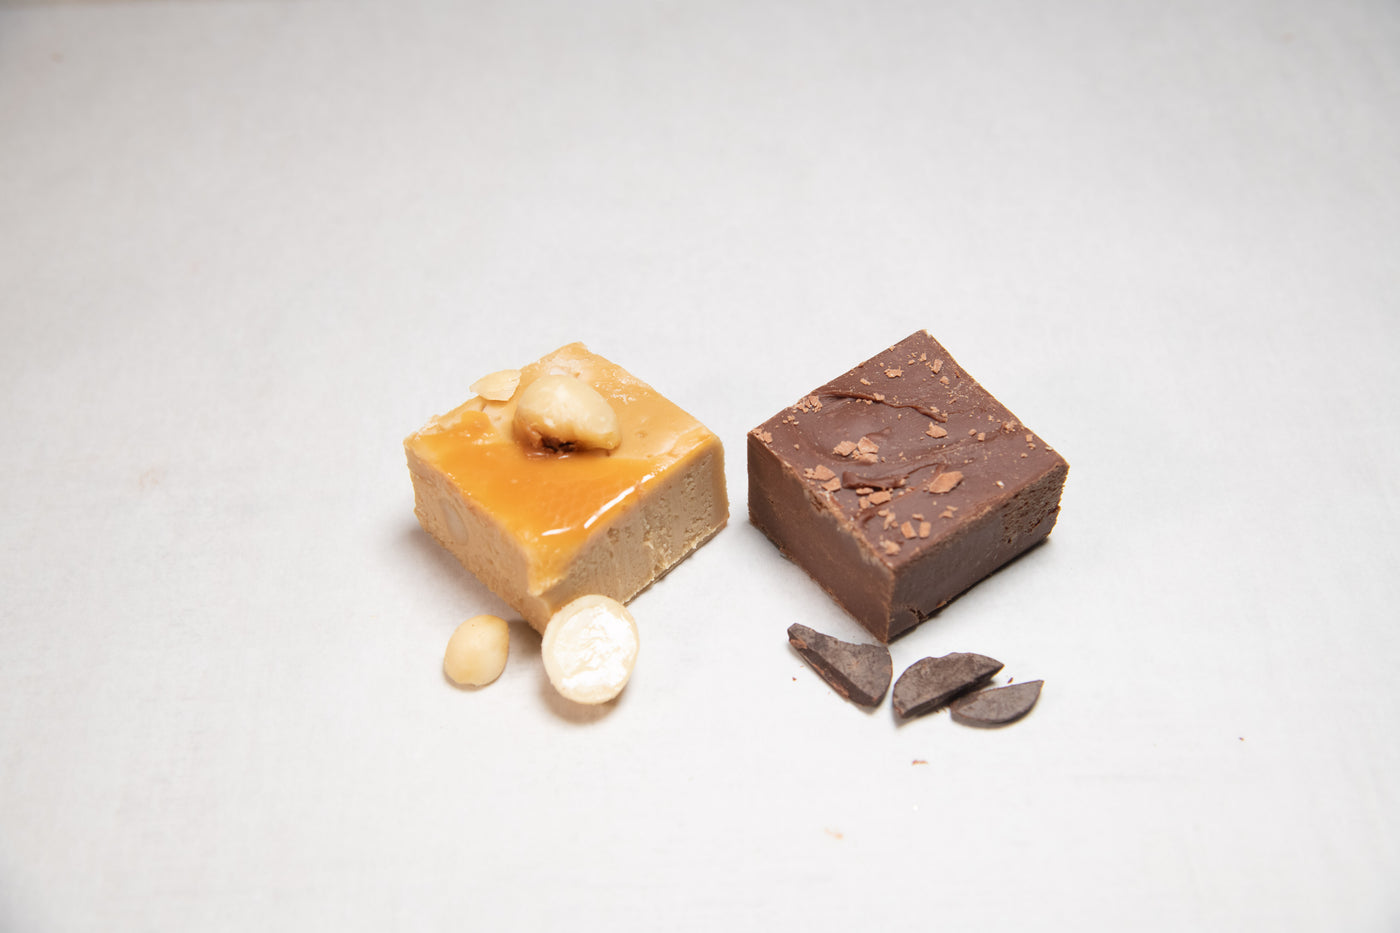 Nutty Duo - Salted Caramel Macadamia fudge & Chocolate fudge (GF) - Black box